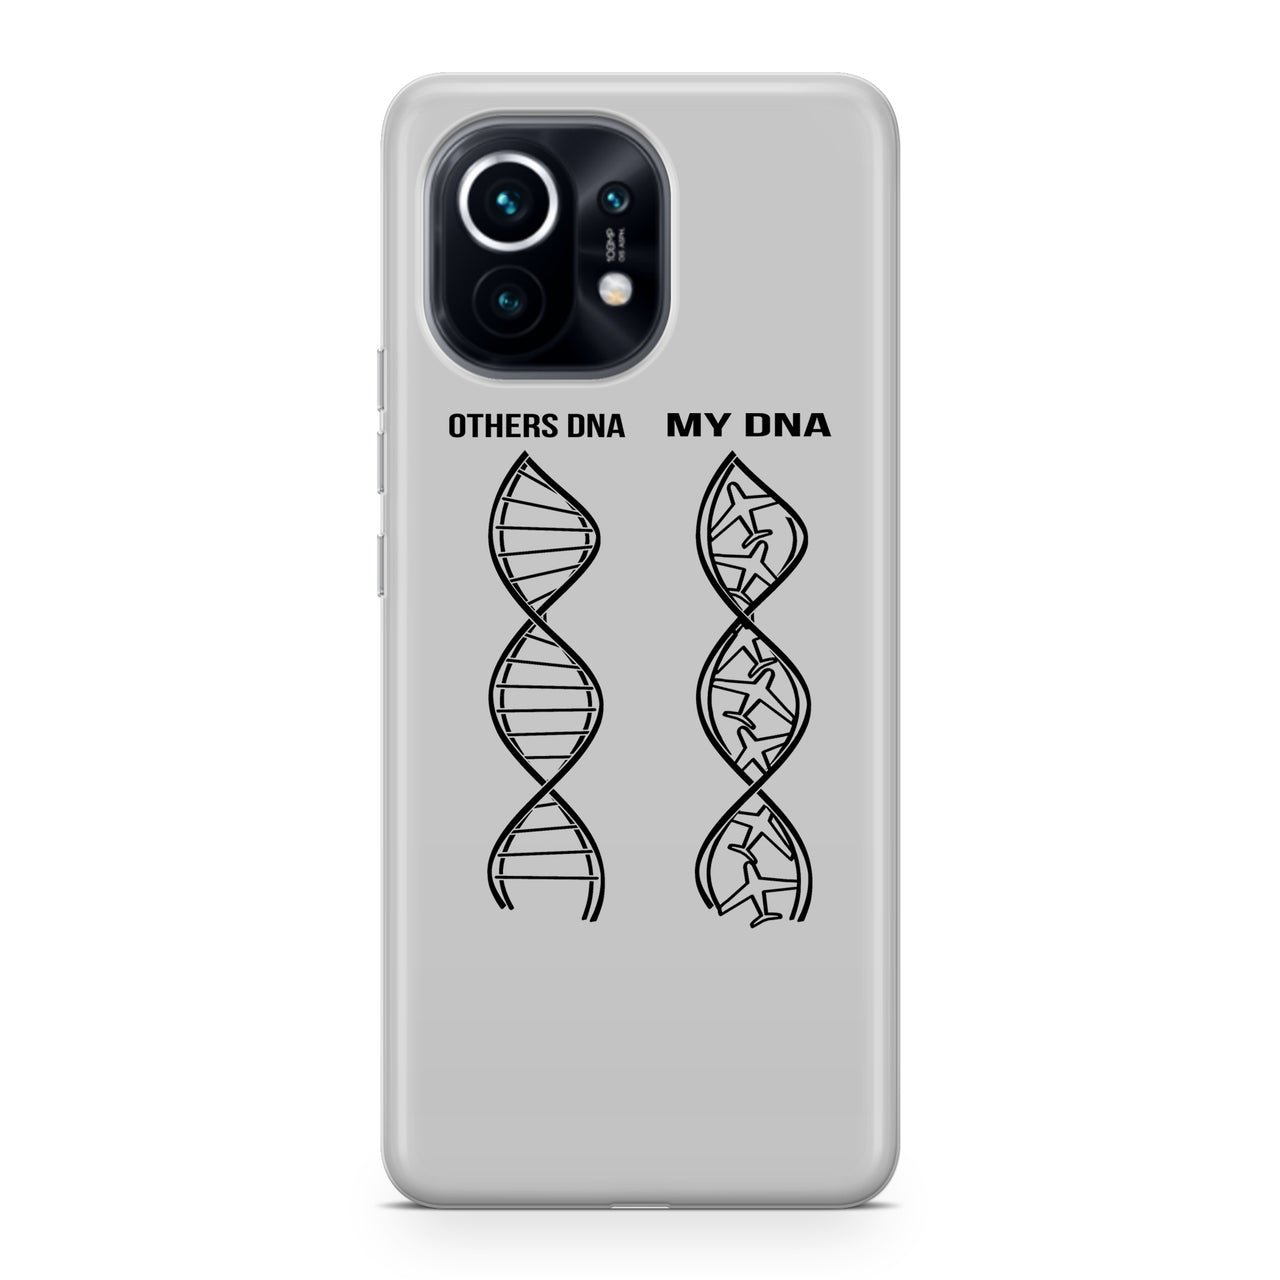 Aviation DNA Designed Xiaomi Cases